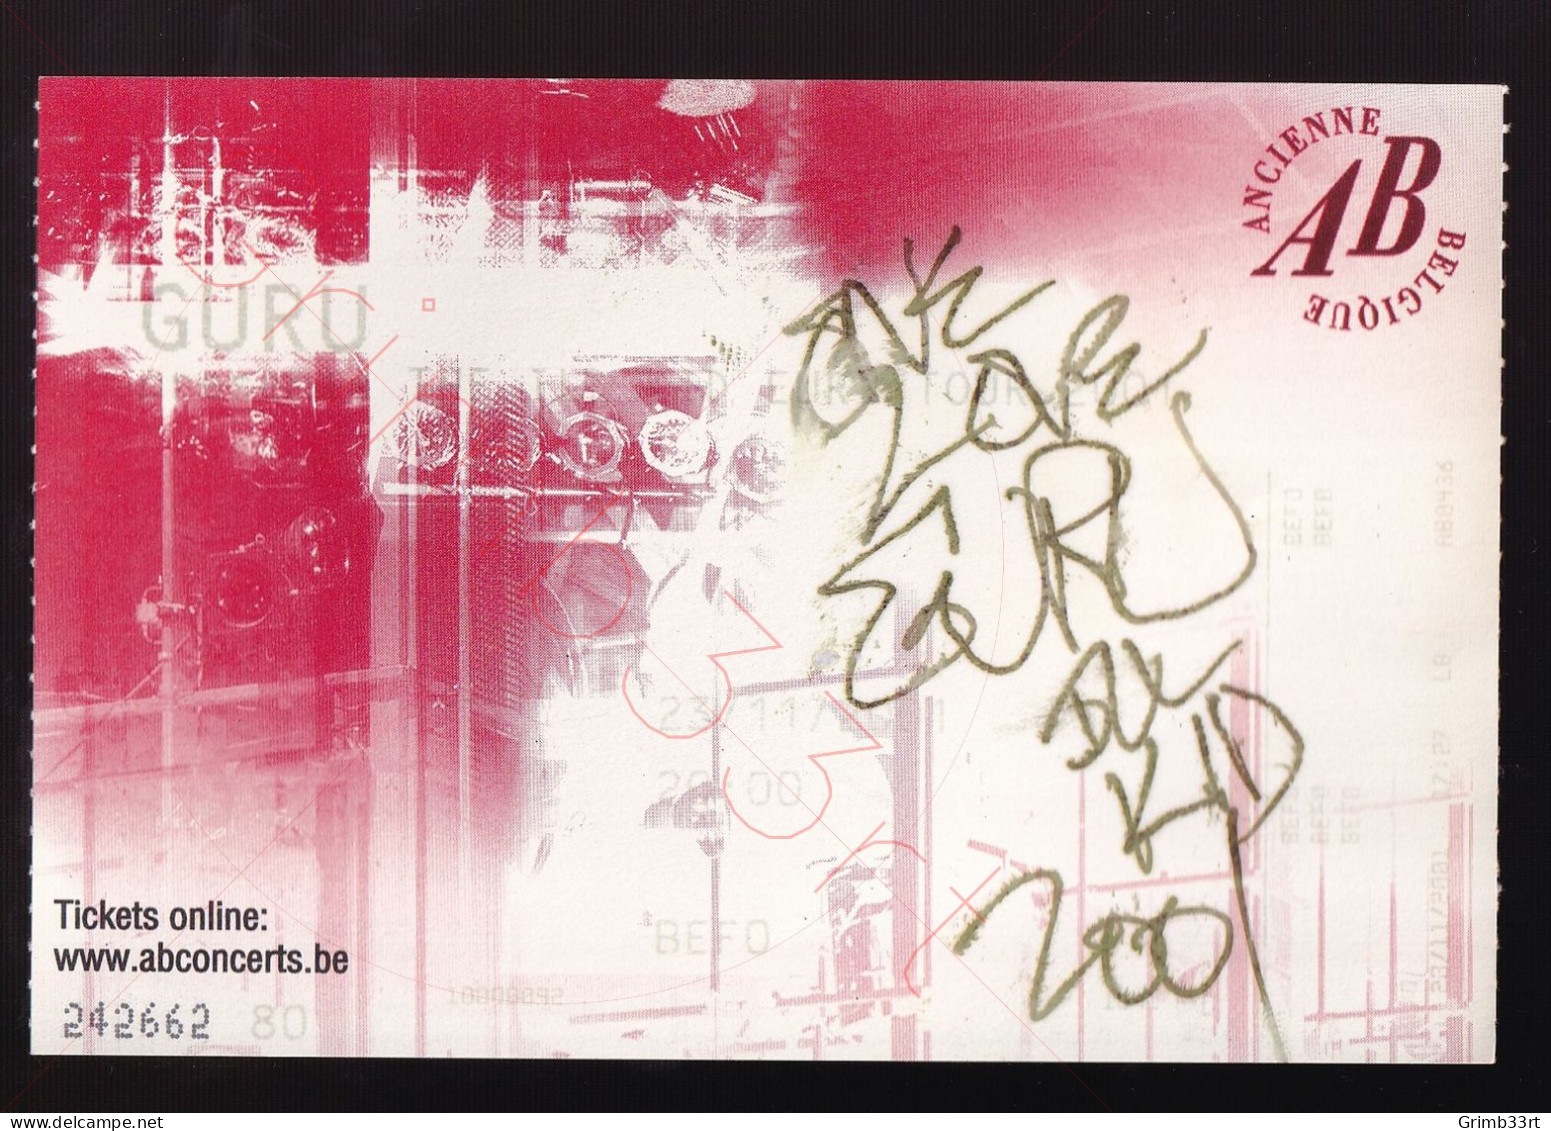 Guru (GESIGNEERD!) - The Ill Kid Tour - 23 November 2001 - Ancienne Belgique (BE) - Concert Ticket - Concerttickets